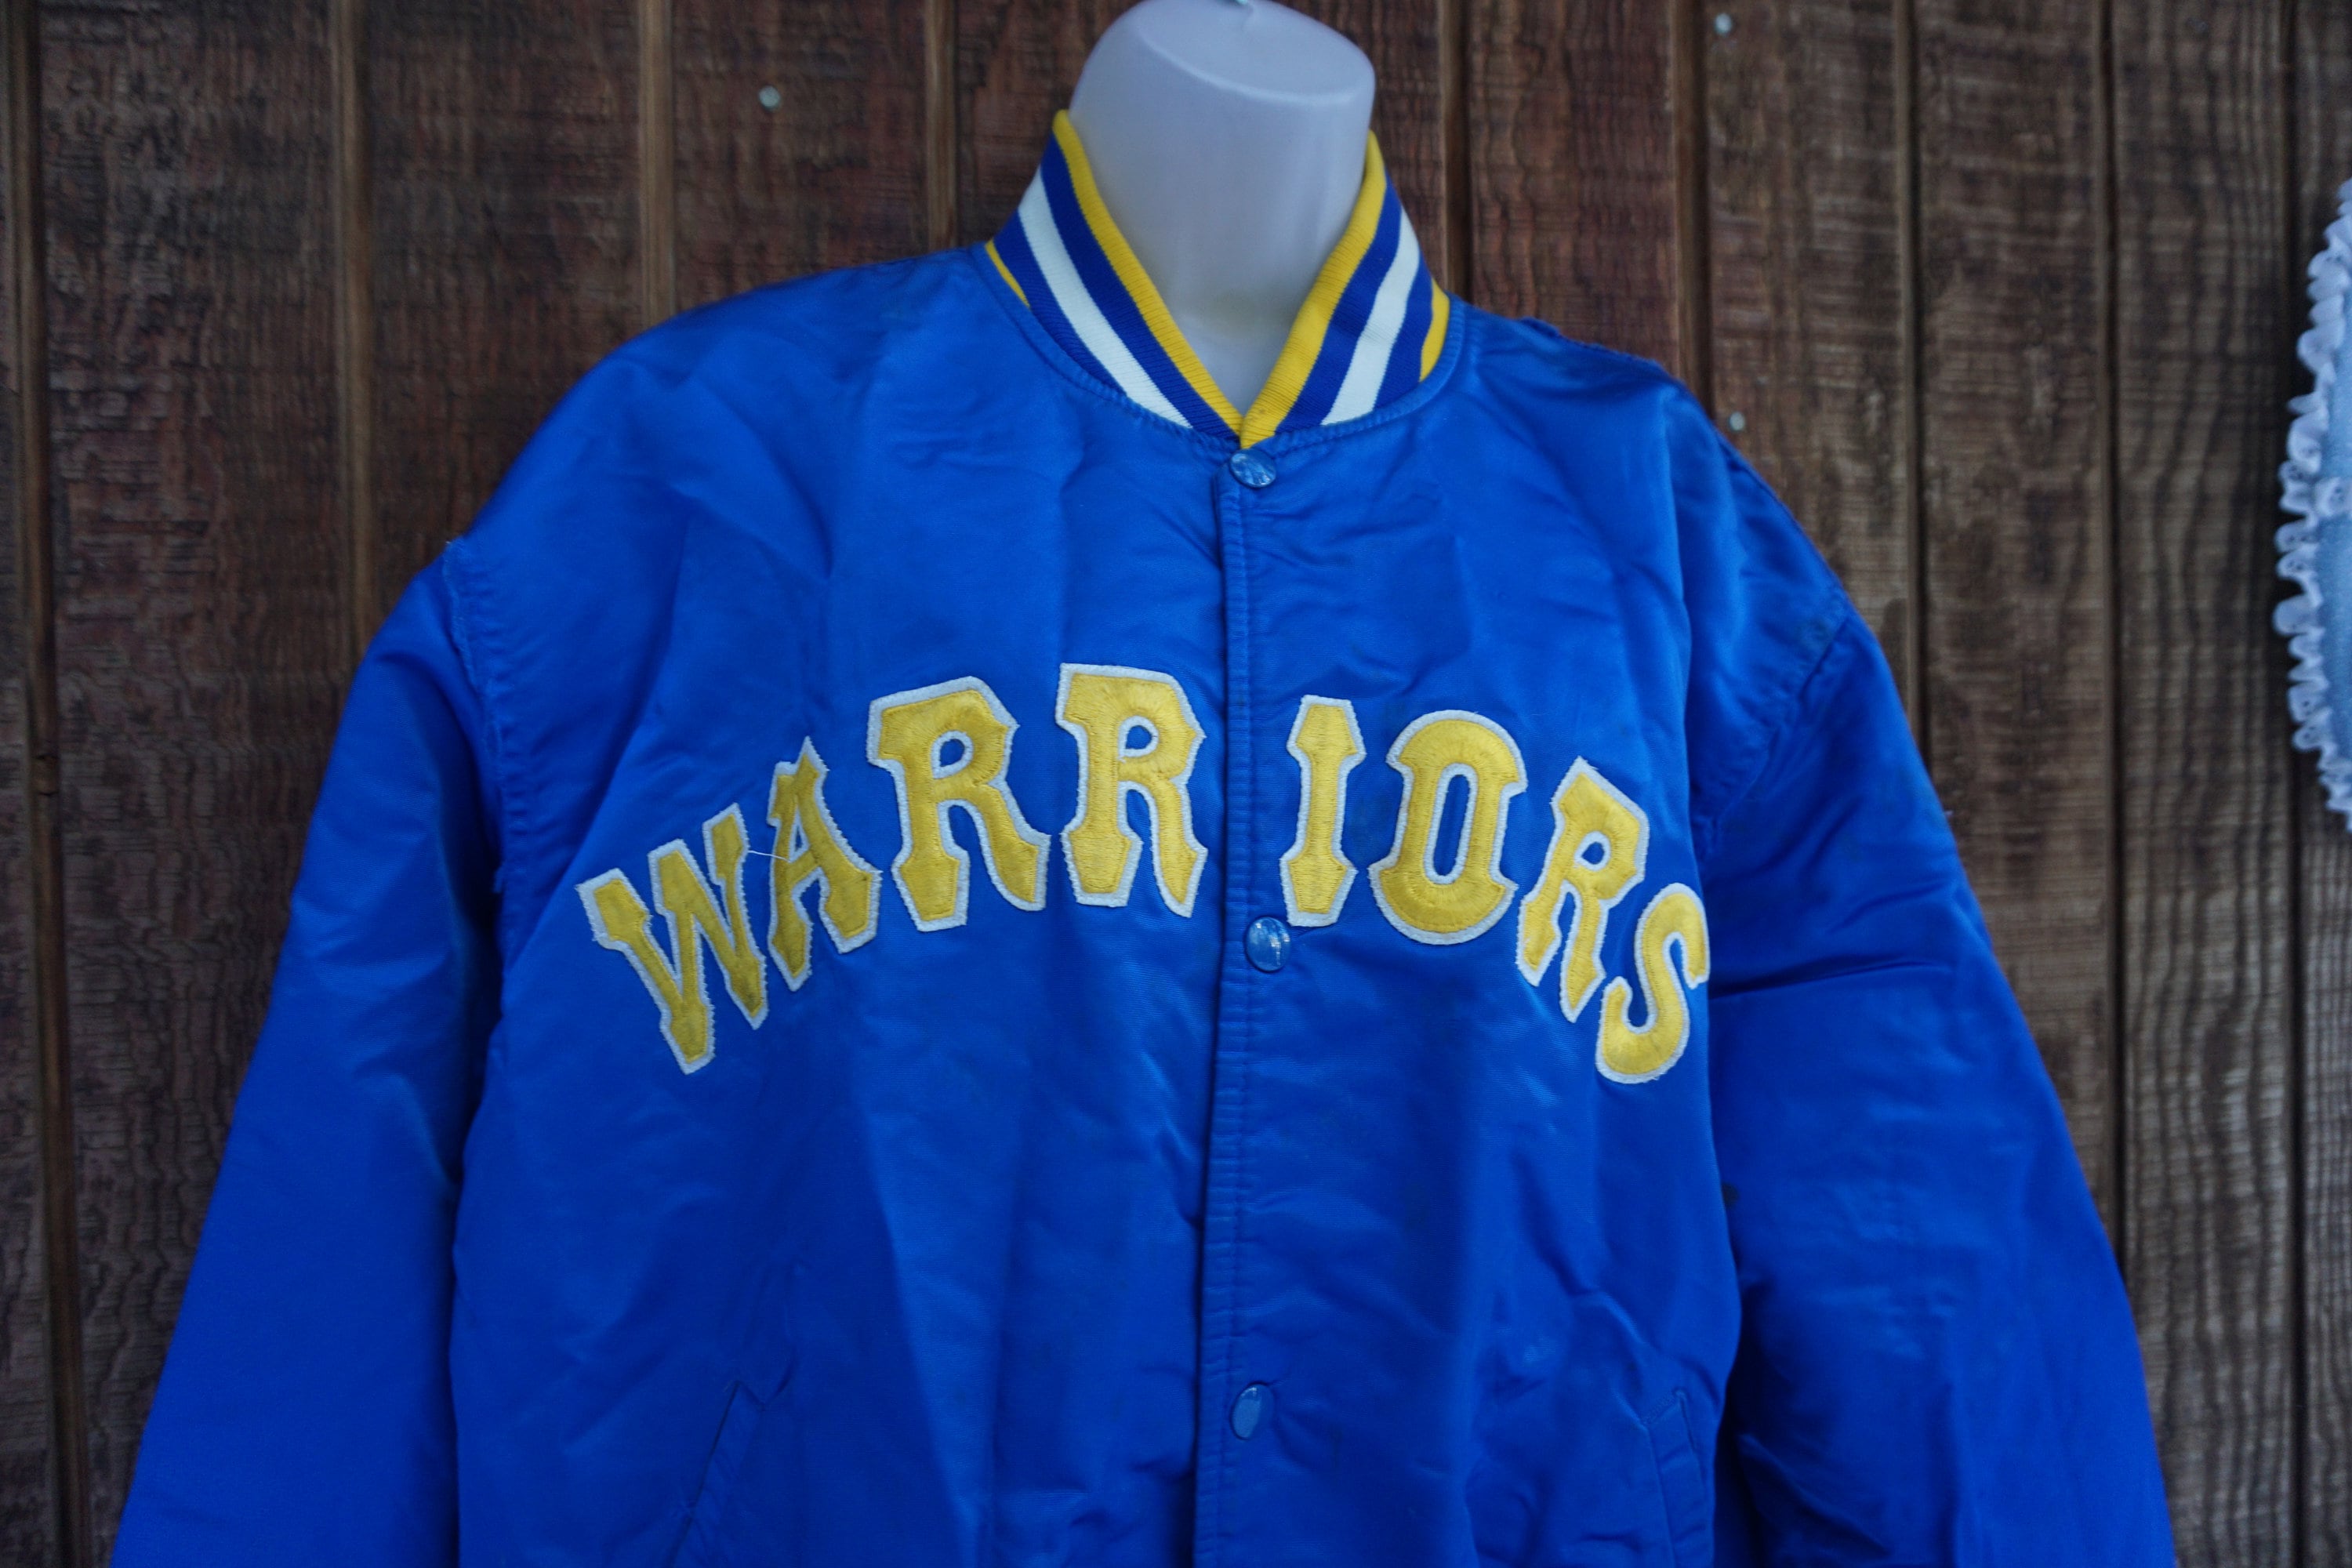 Maker of Jacket NBA Teams Jackets Indiana Pacers Vintage Blue Satin